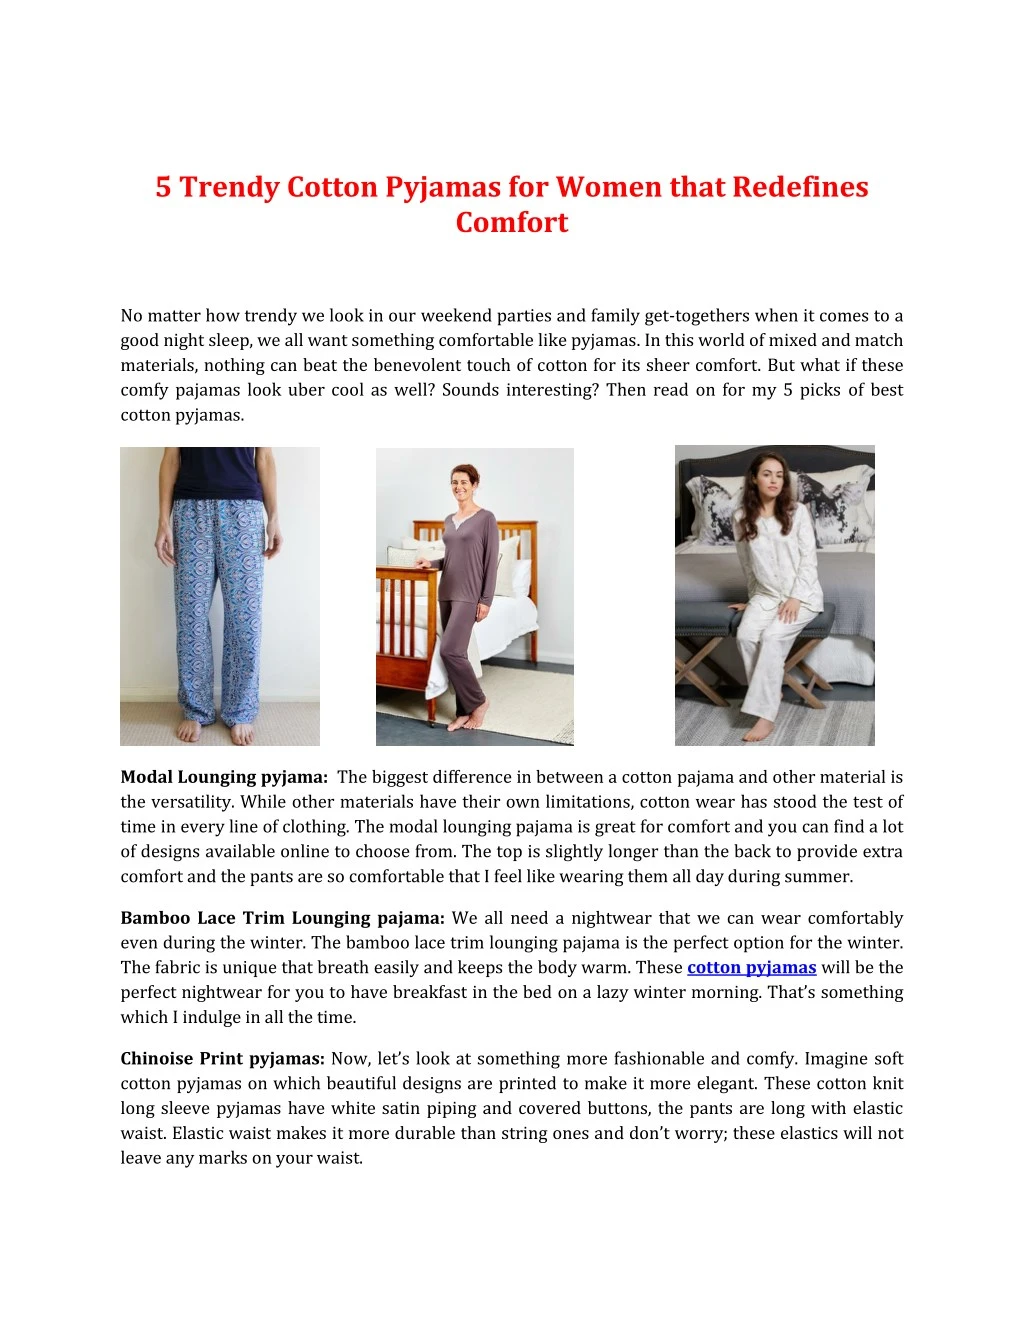 5 trendy cotton pyjamas for women that redefines